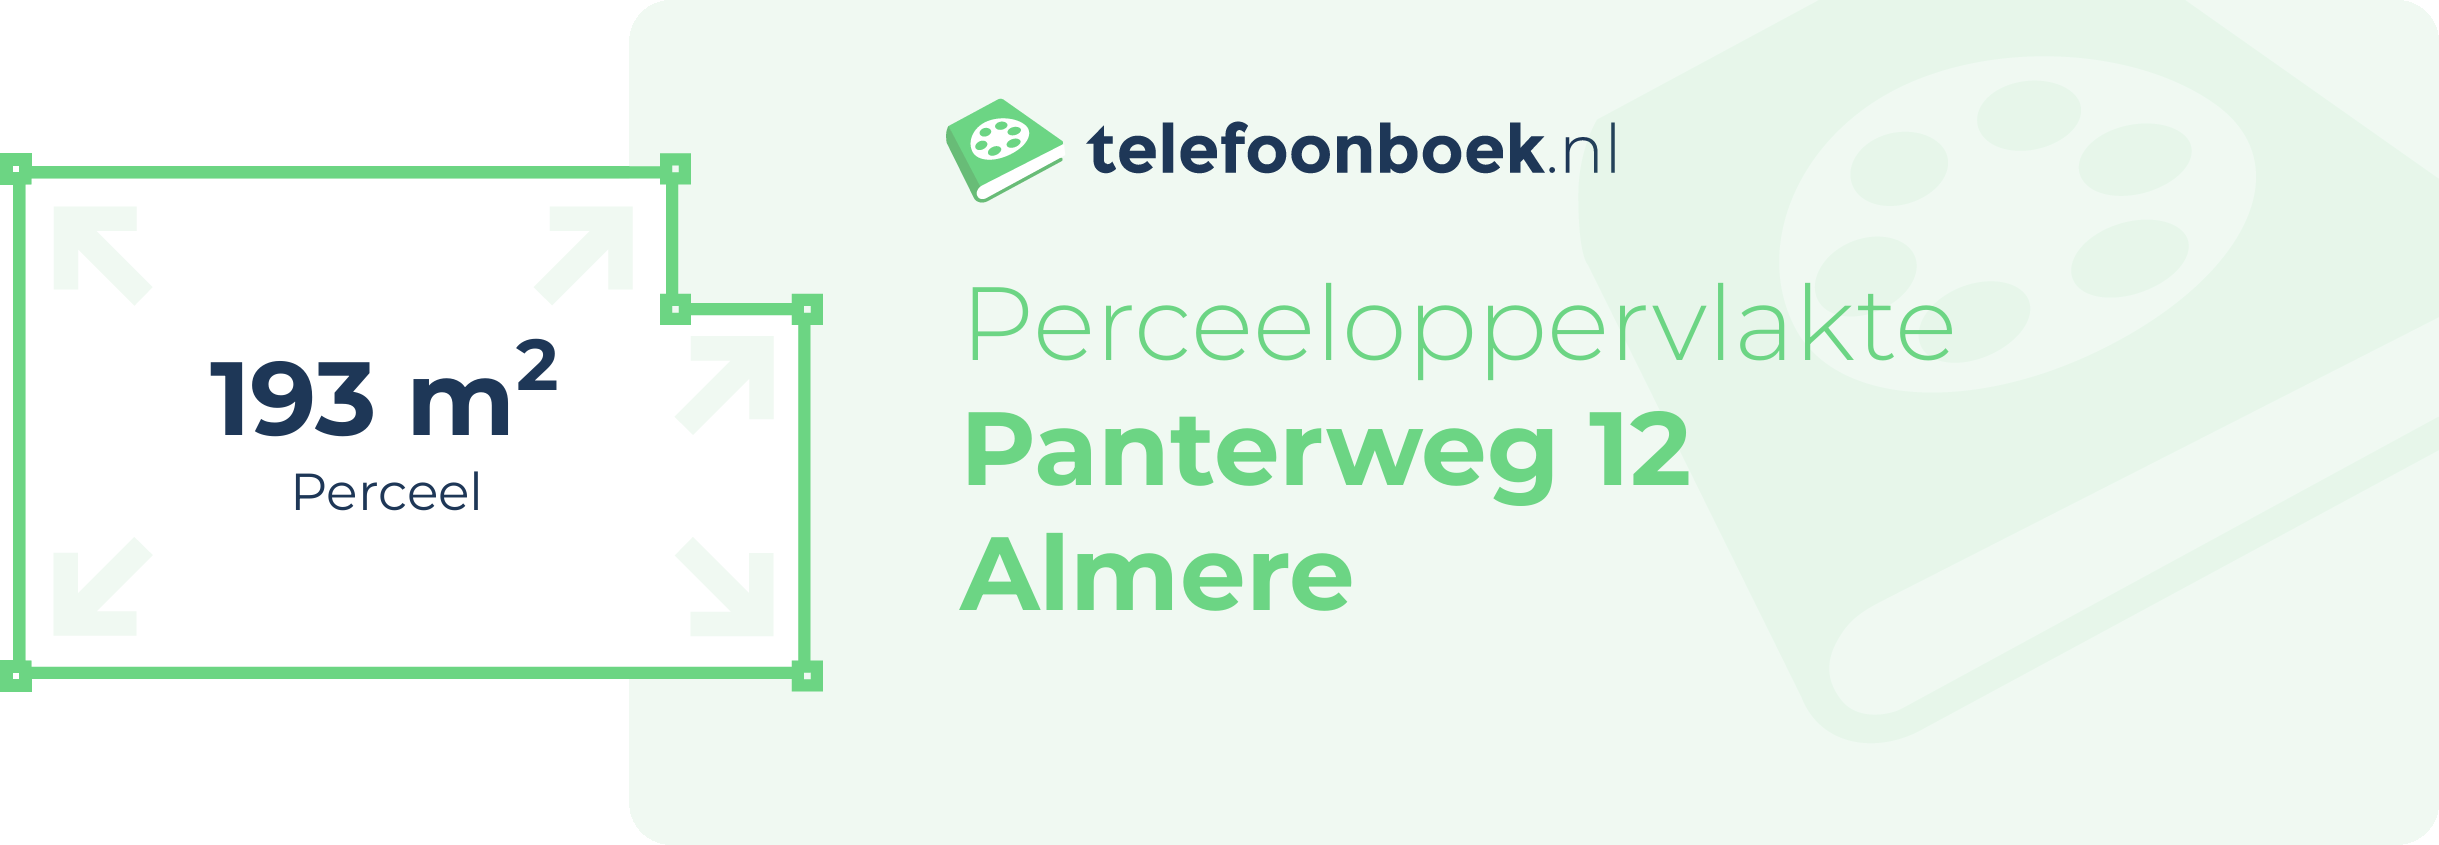 Perceeloppervlakte Panterweg 12 Almere